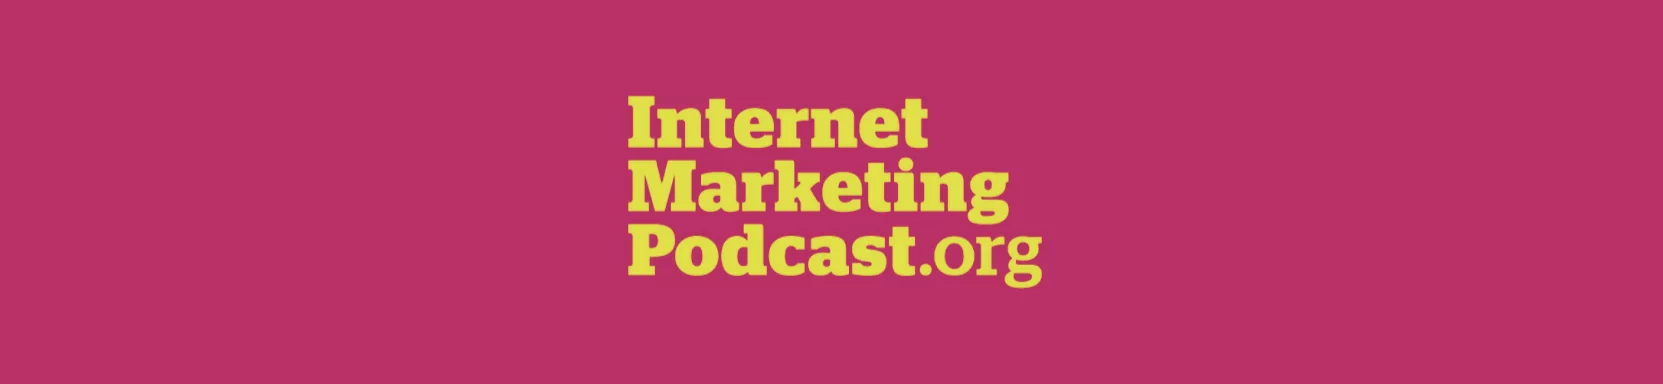 Internet Marketing Podcast